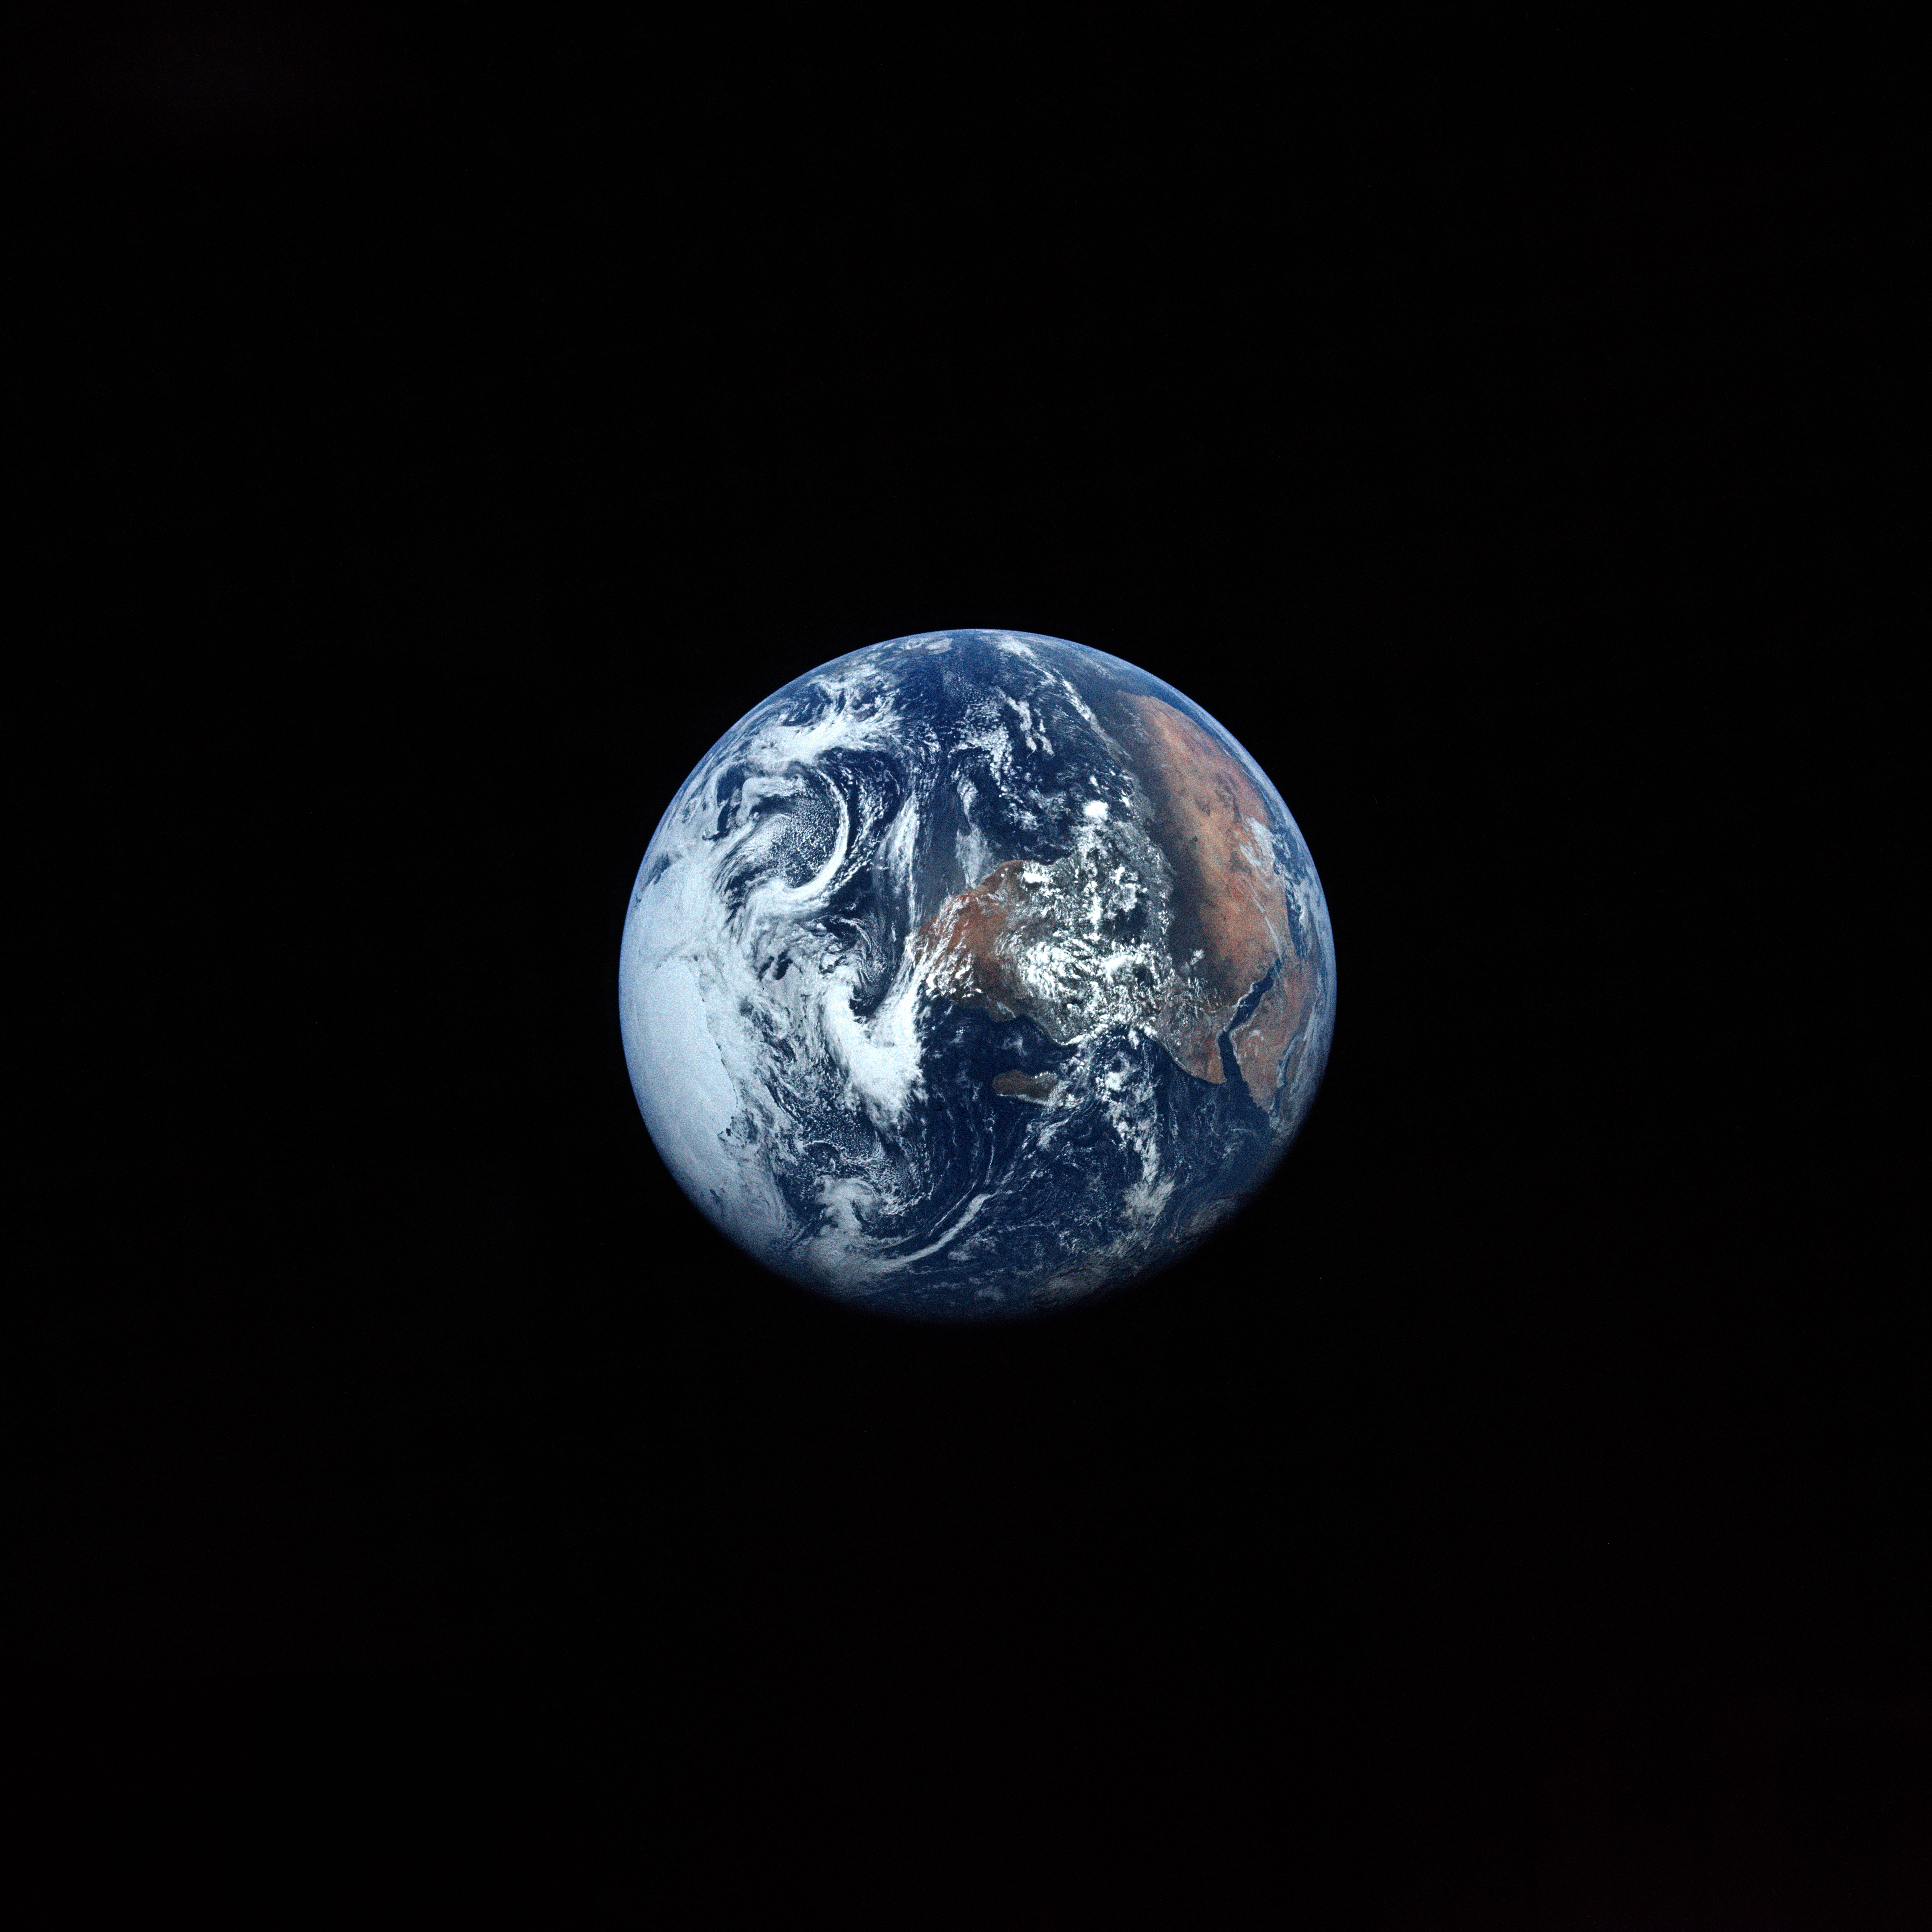 universe, land, earth, planet, black